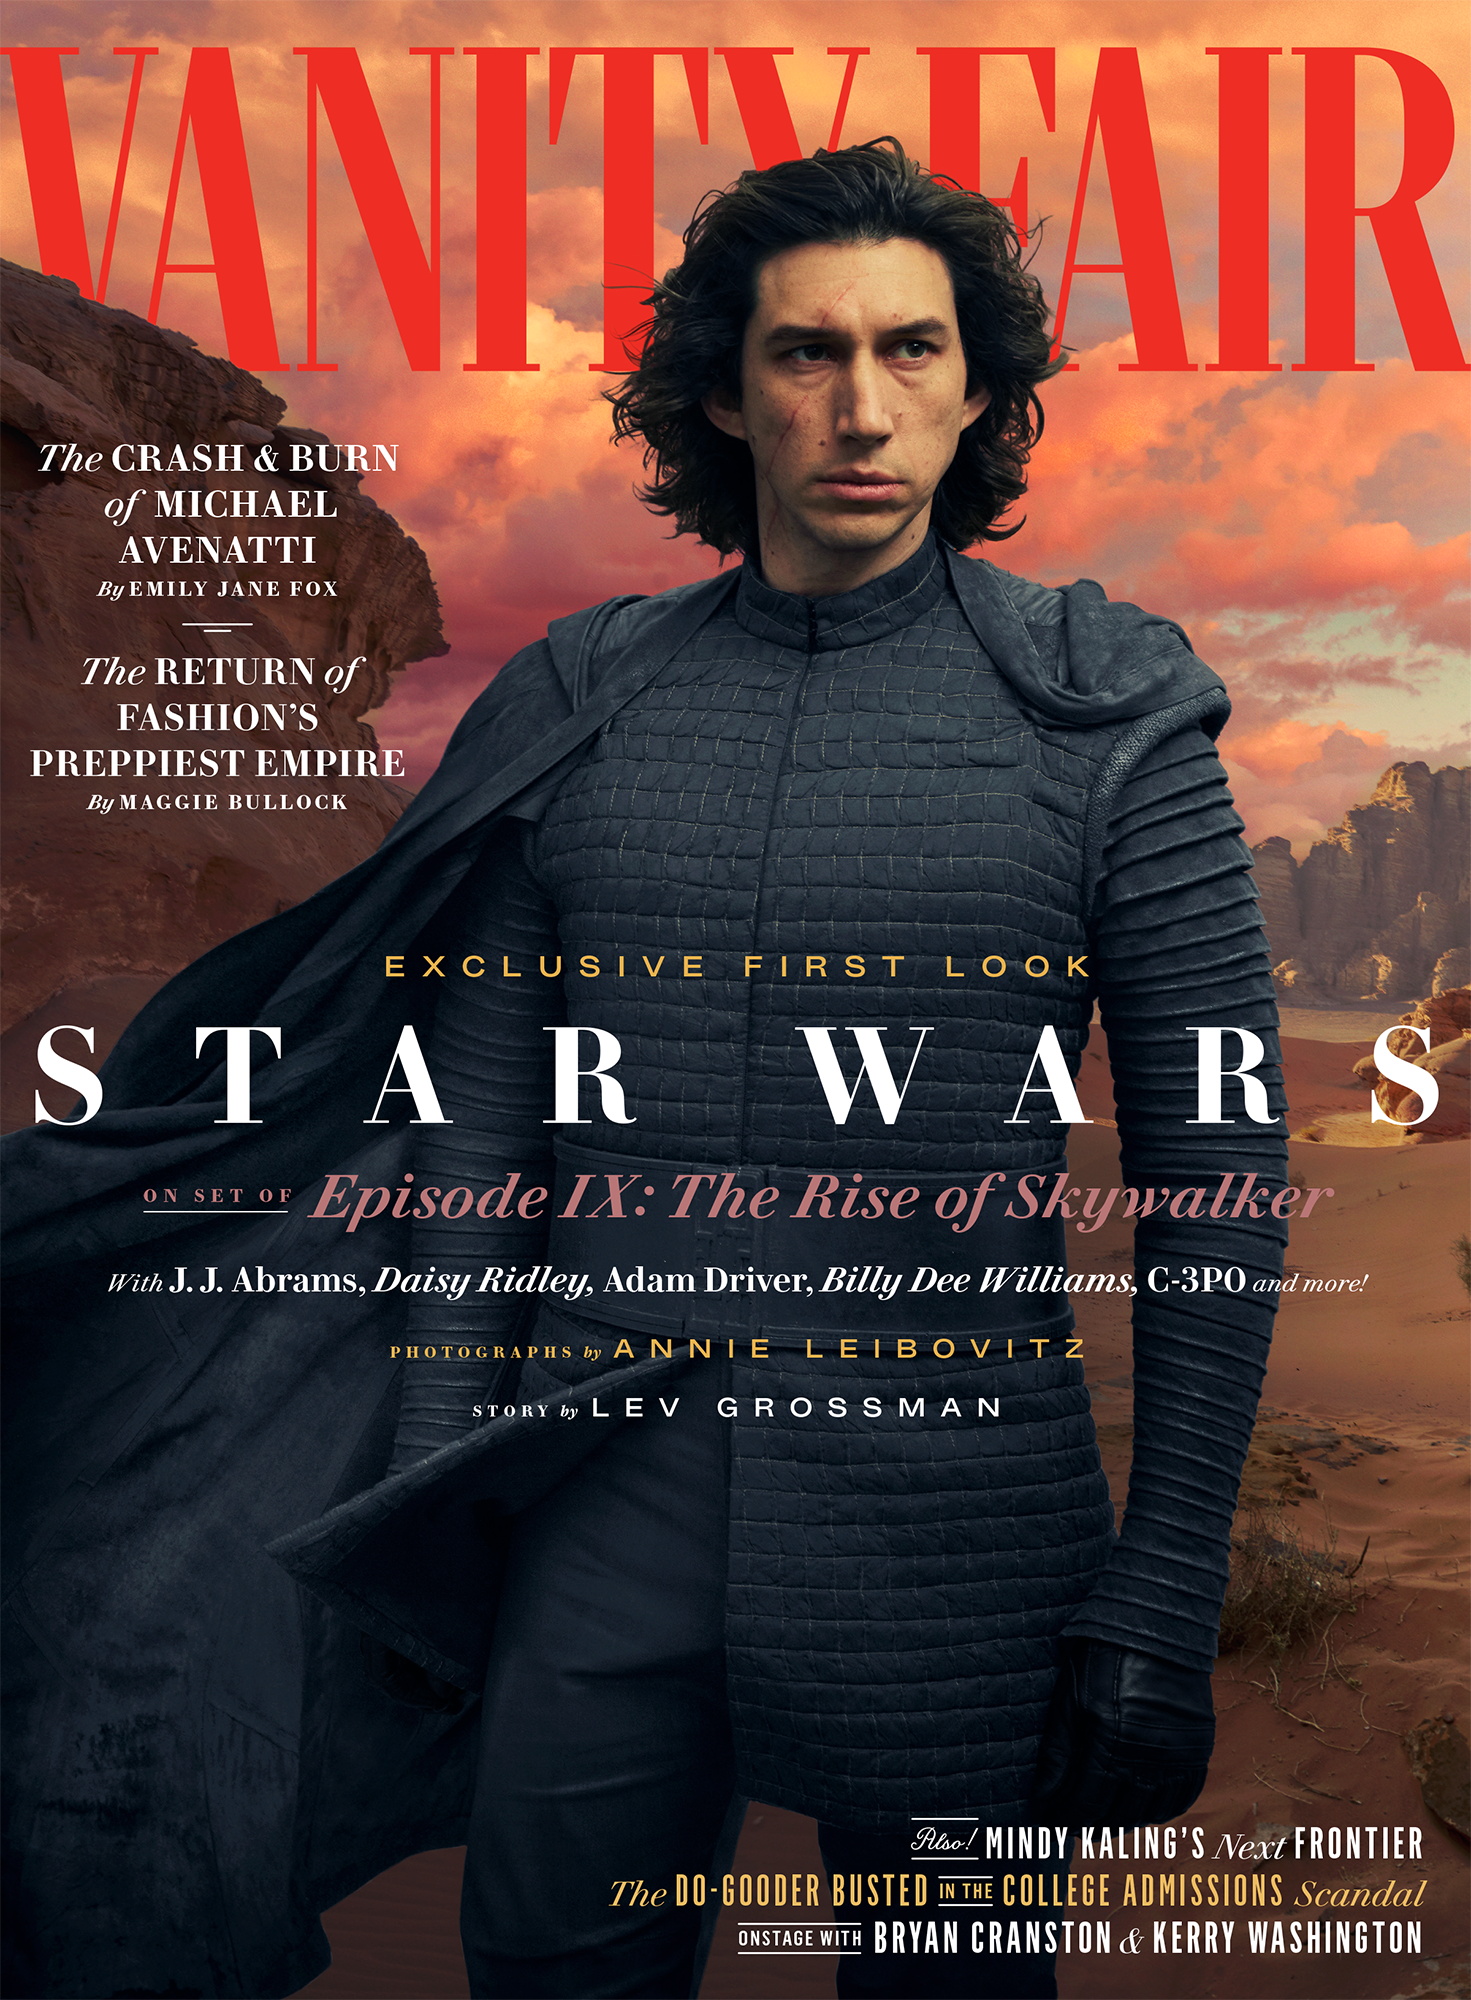 Star Wars Episode 9 Empire Magazine Wallpapers